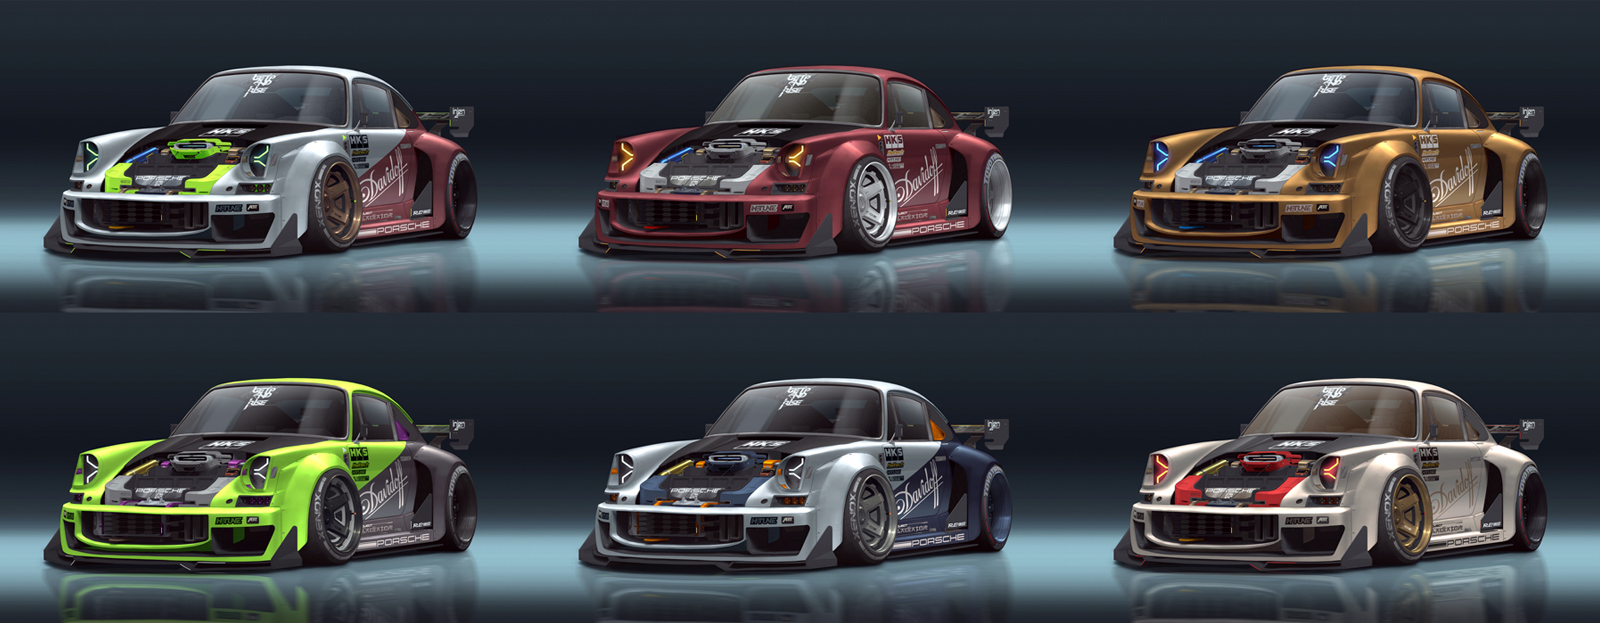 Porsche911_all